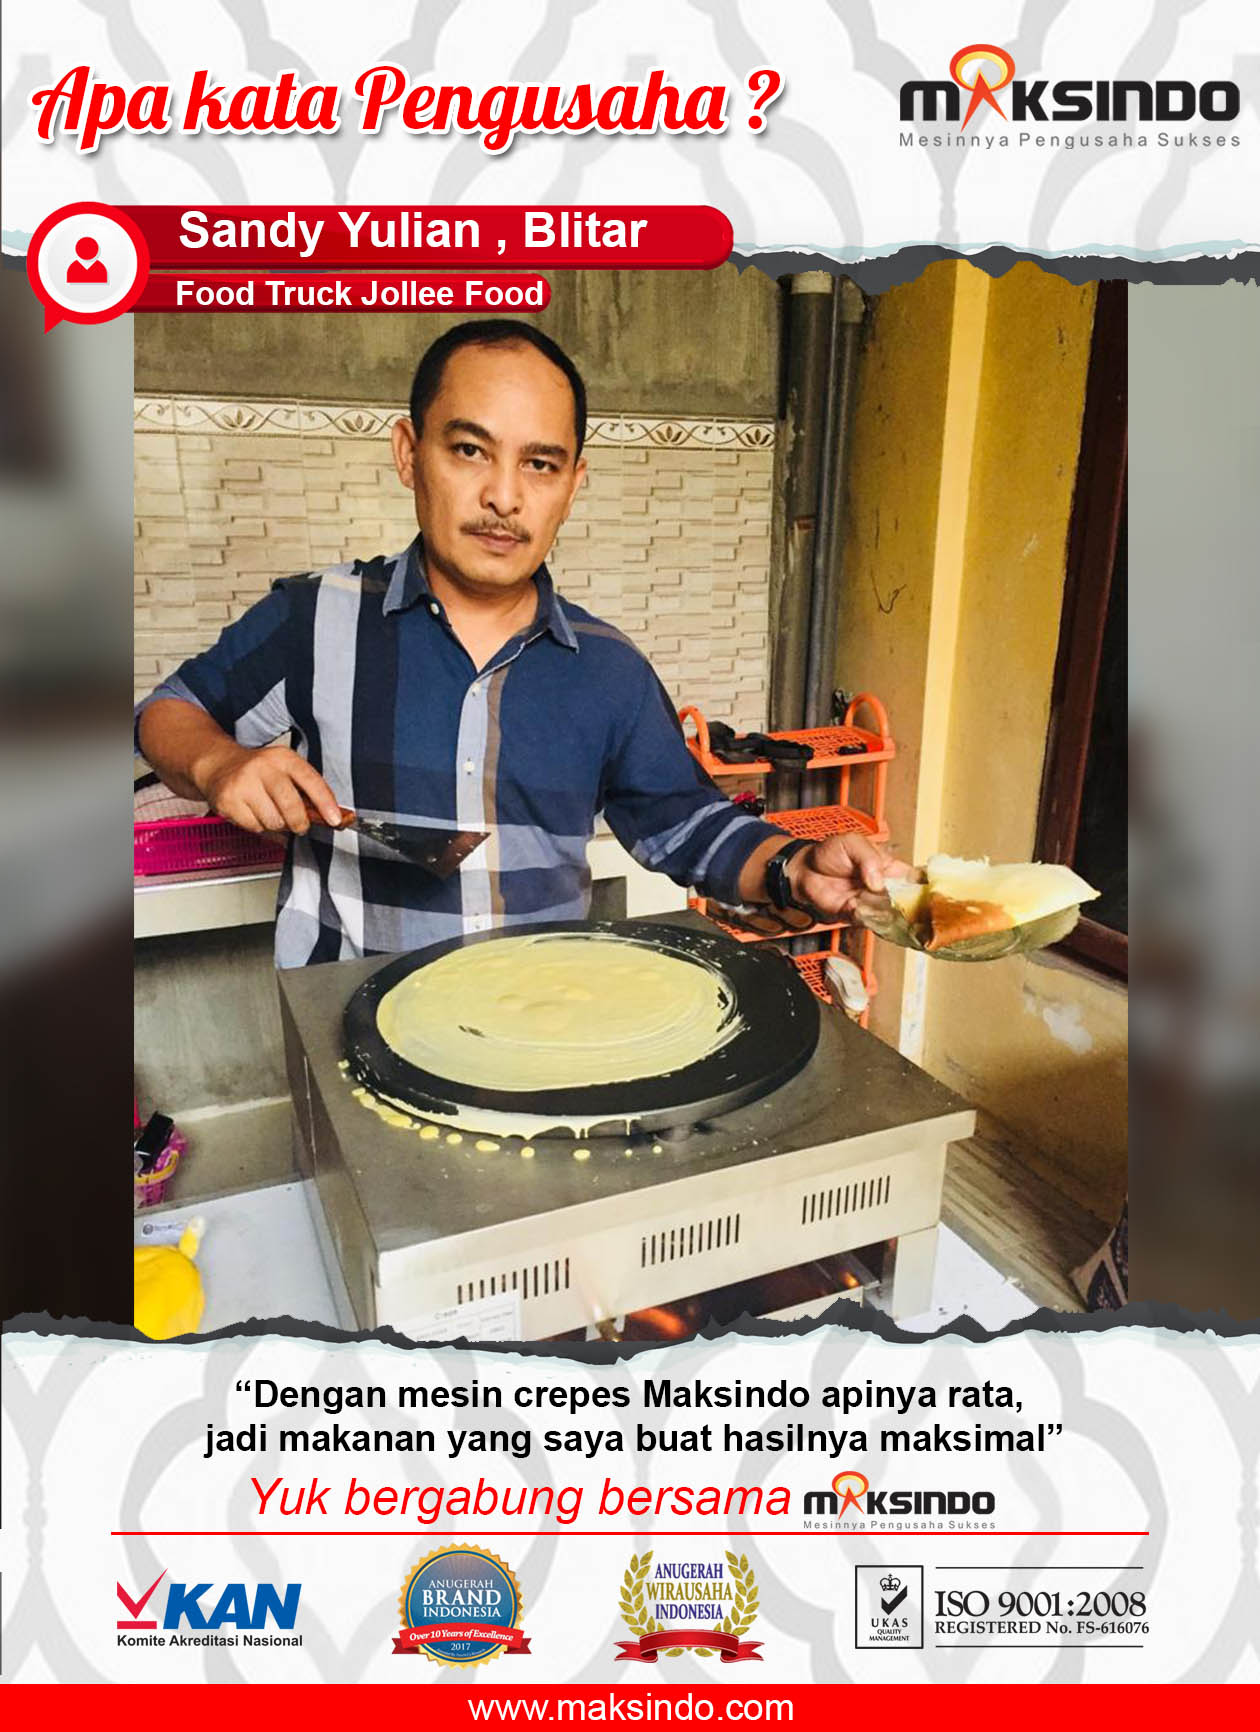 Food Truck Jolle Food : Mesin Crepes Maksindo Sangat Maksimal